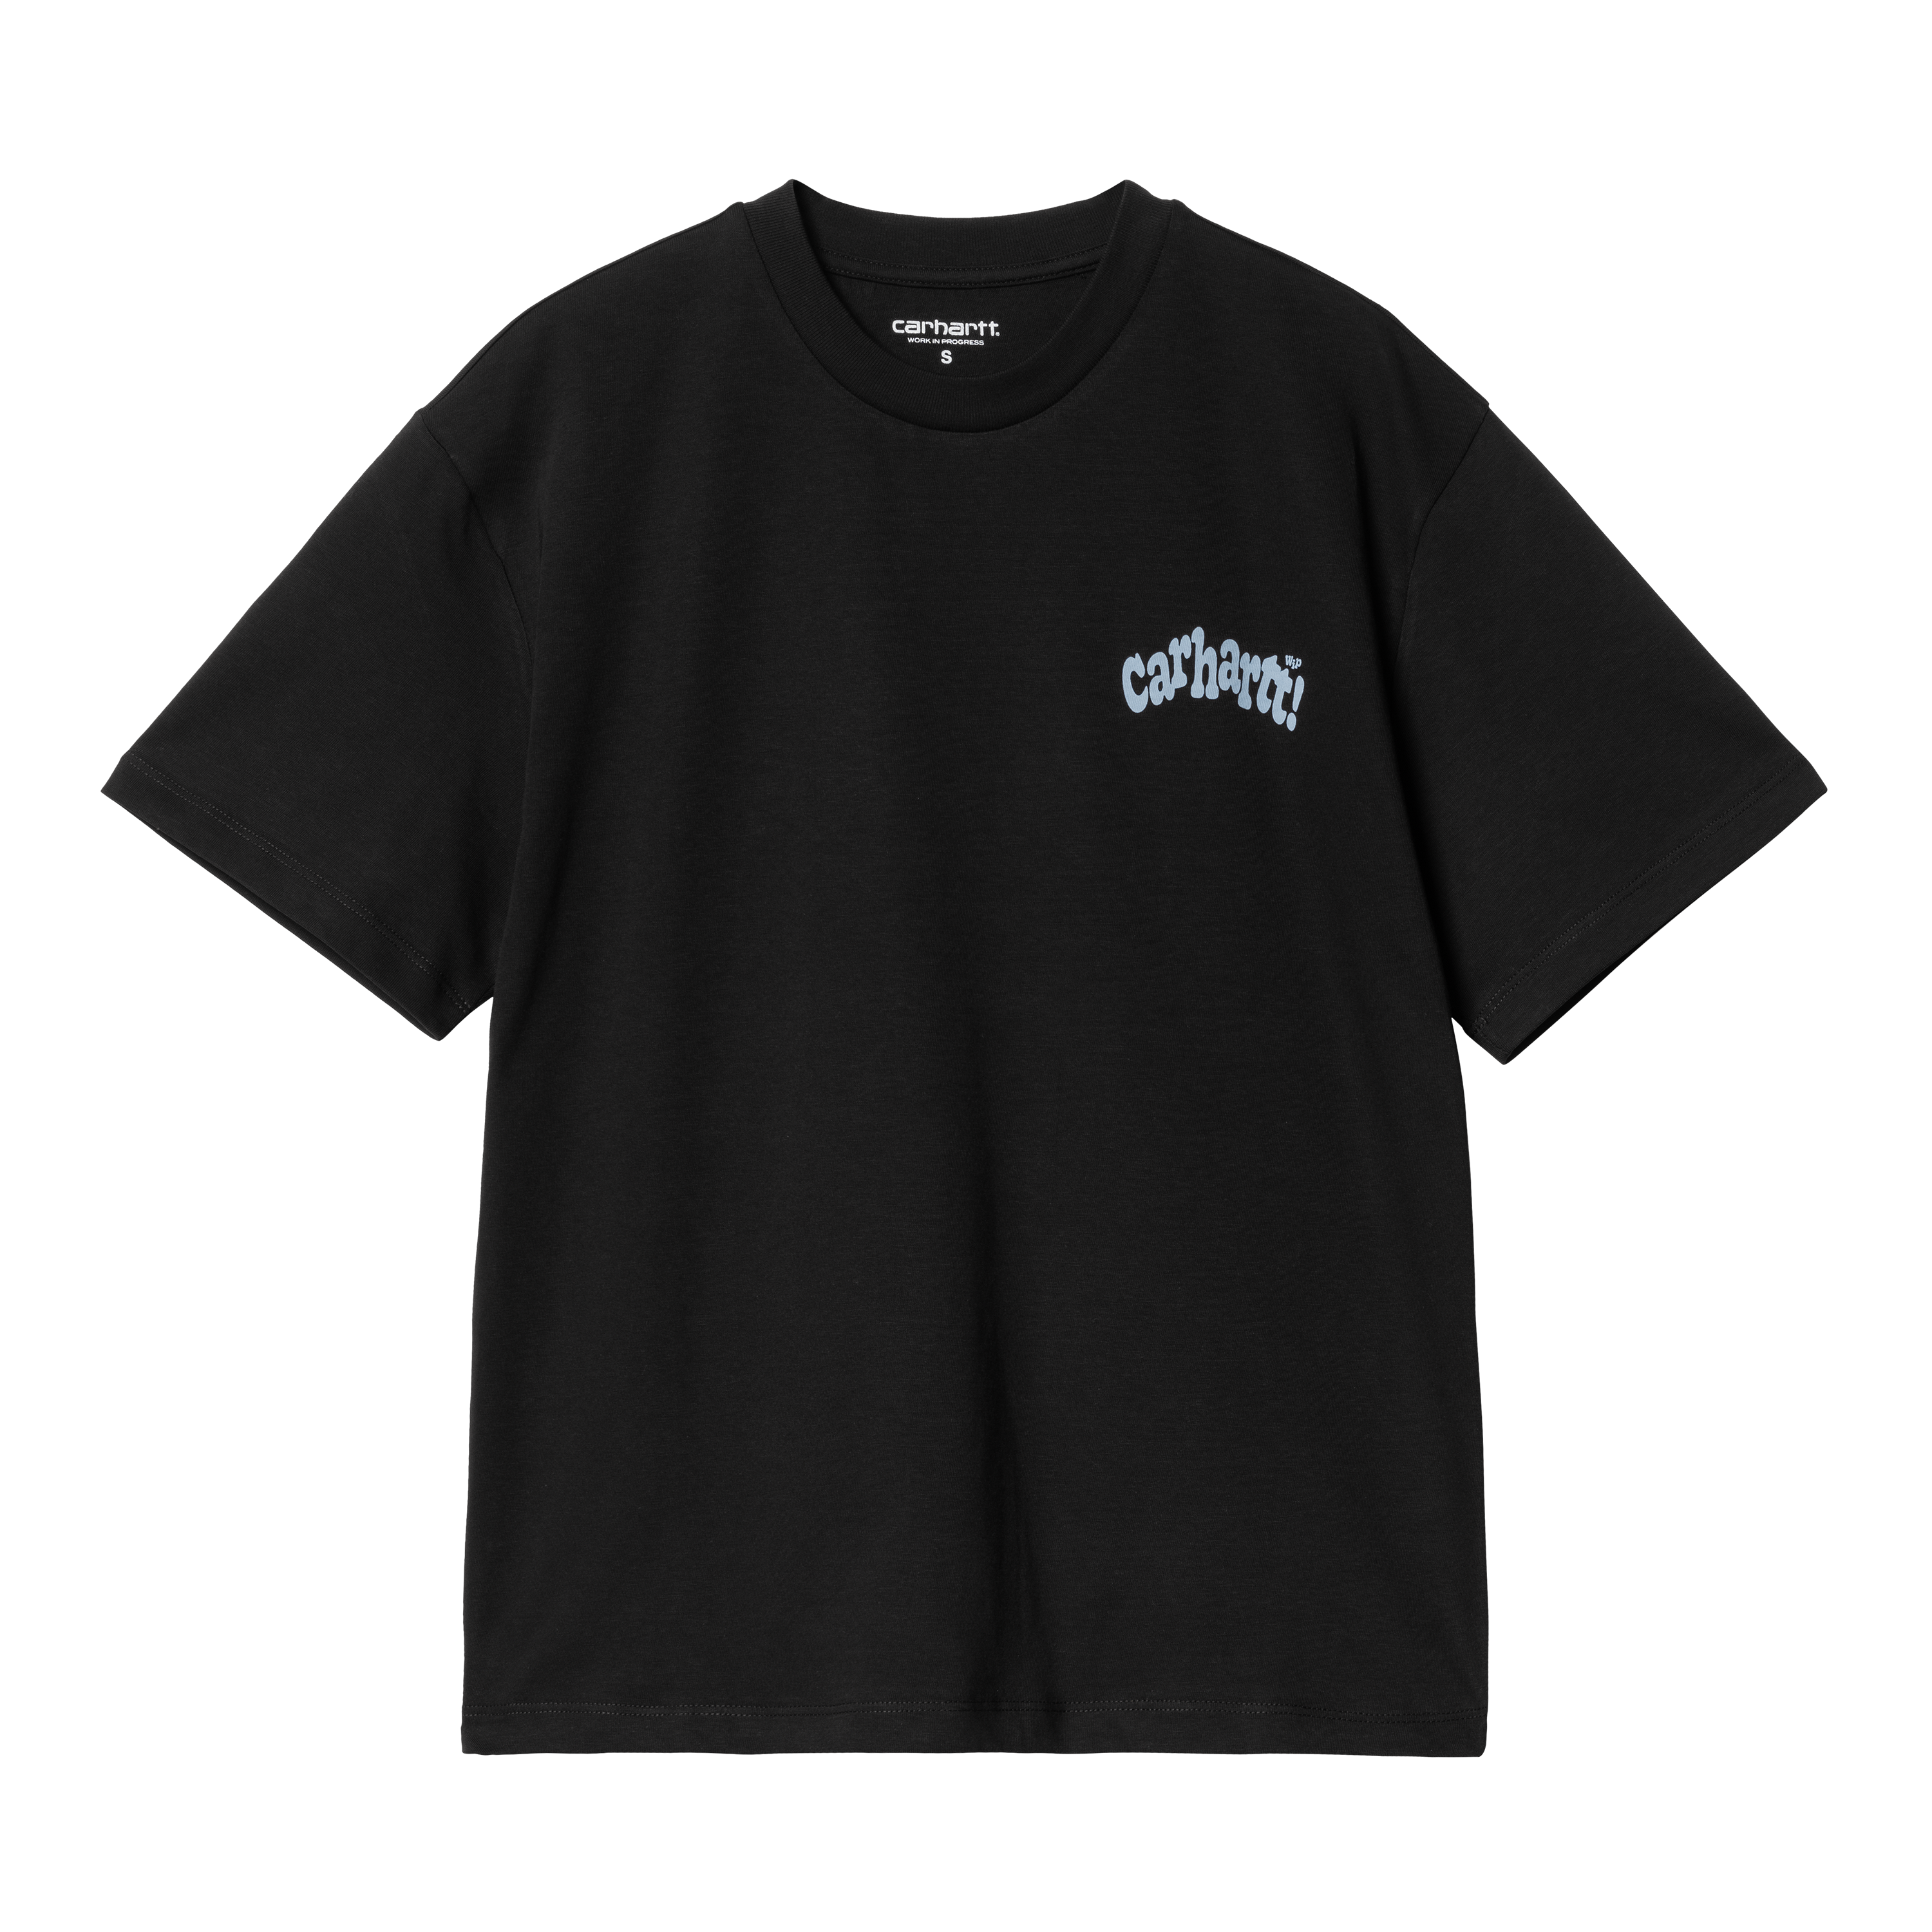 Carhartt WIP Women’s Short Sleeve Amour T-Shirt in Black